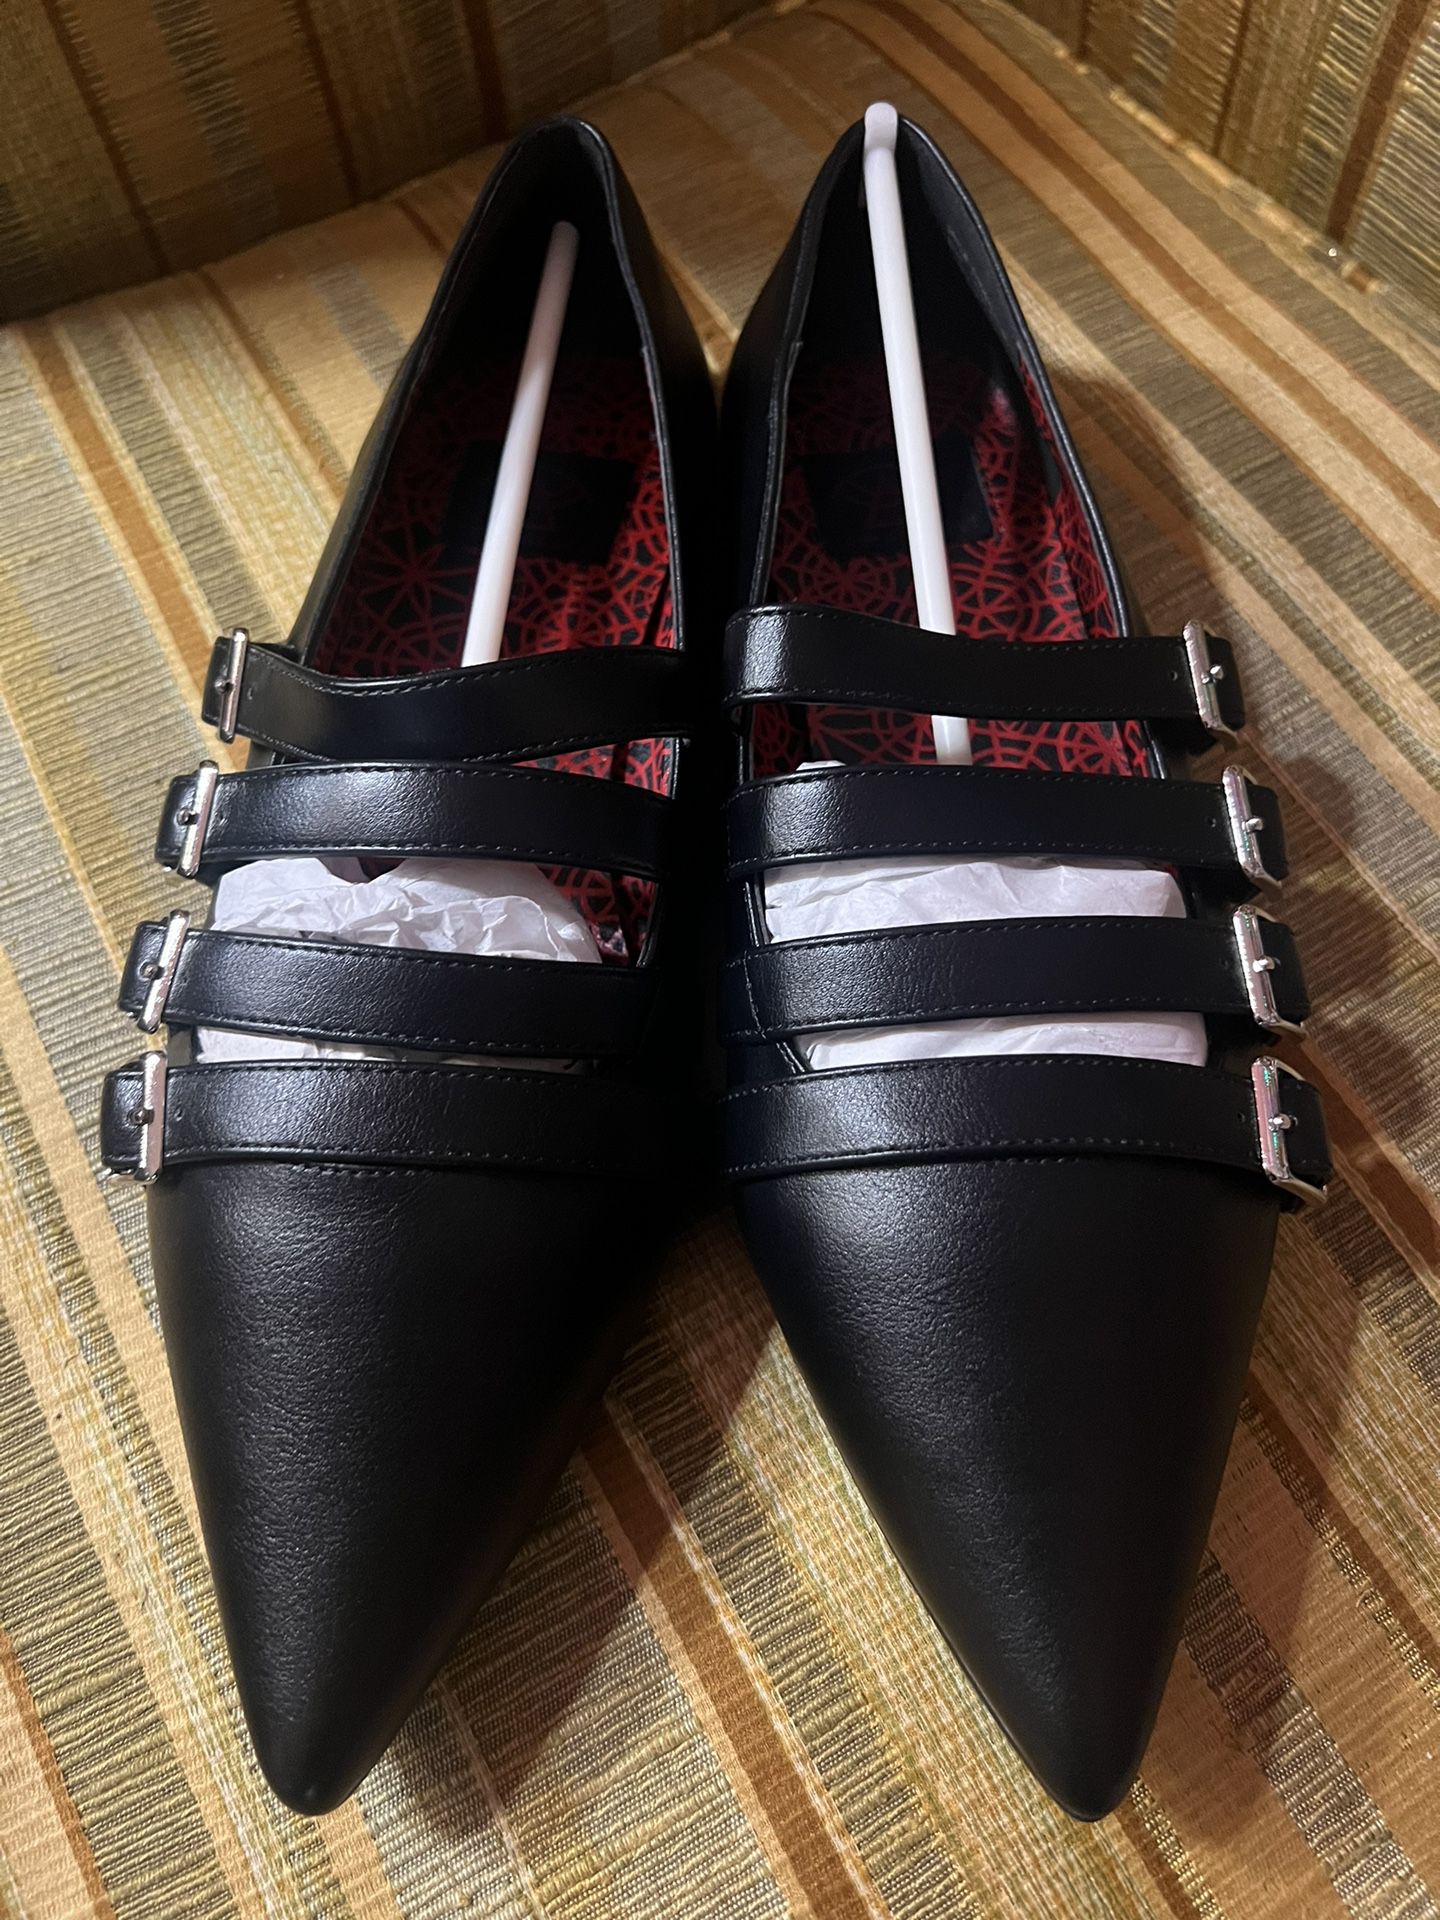 Coven Black Flat Women’s Shoes